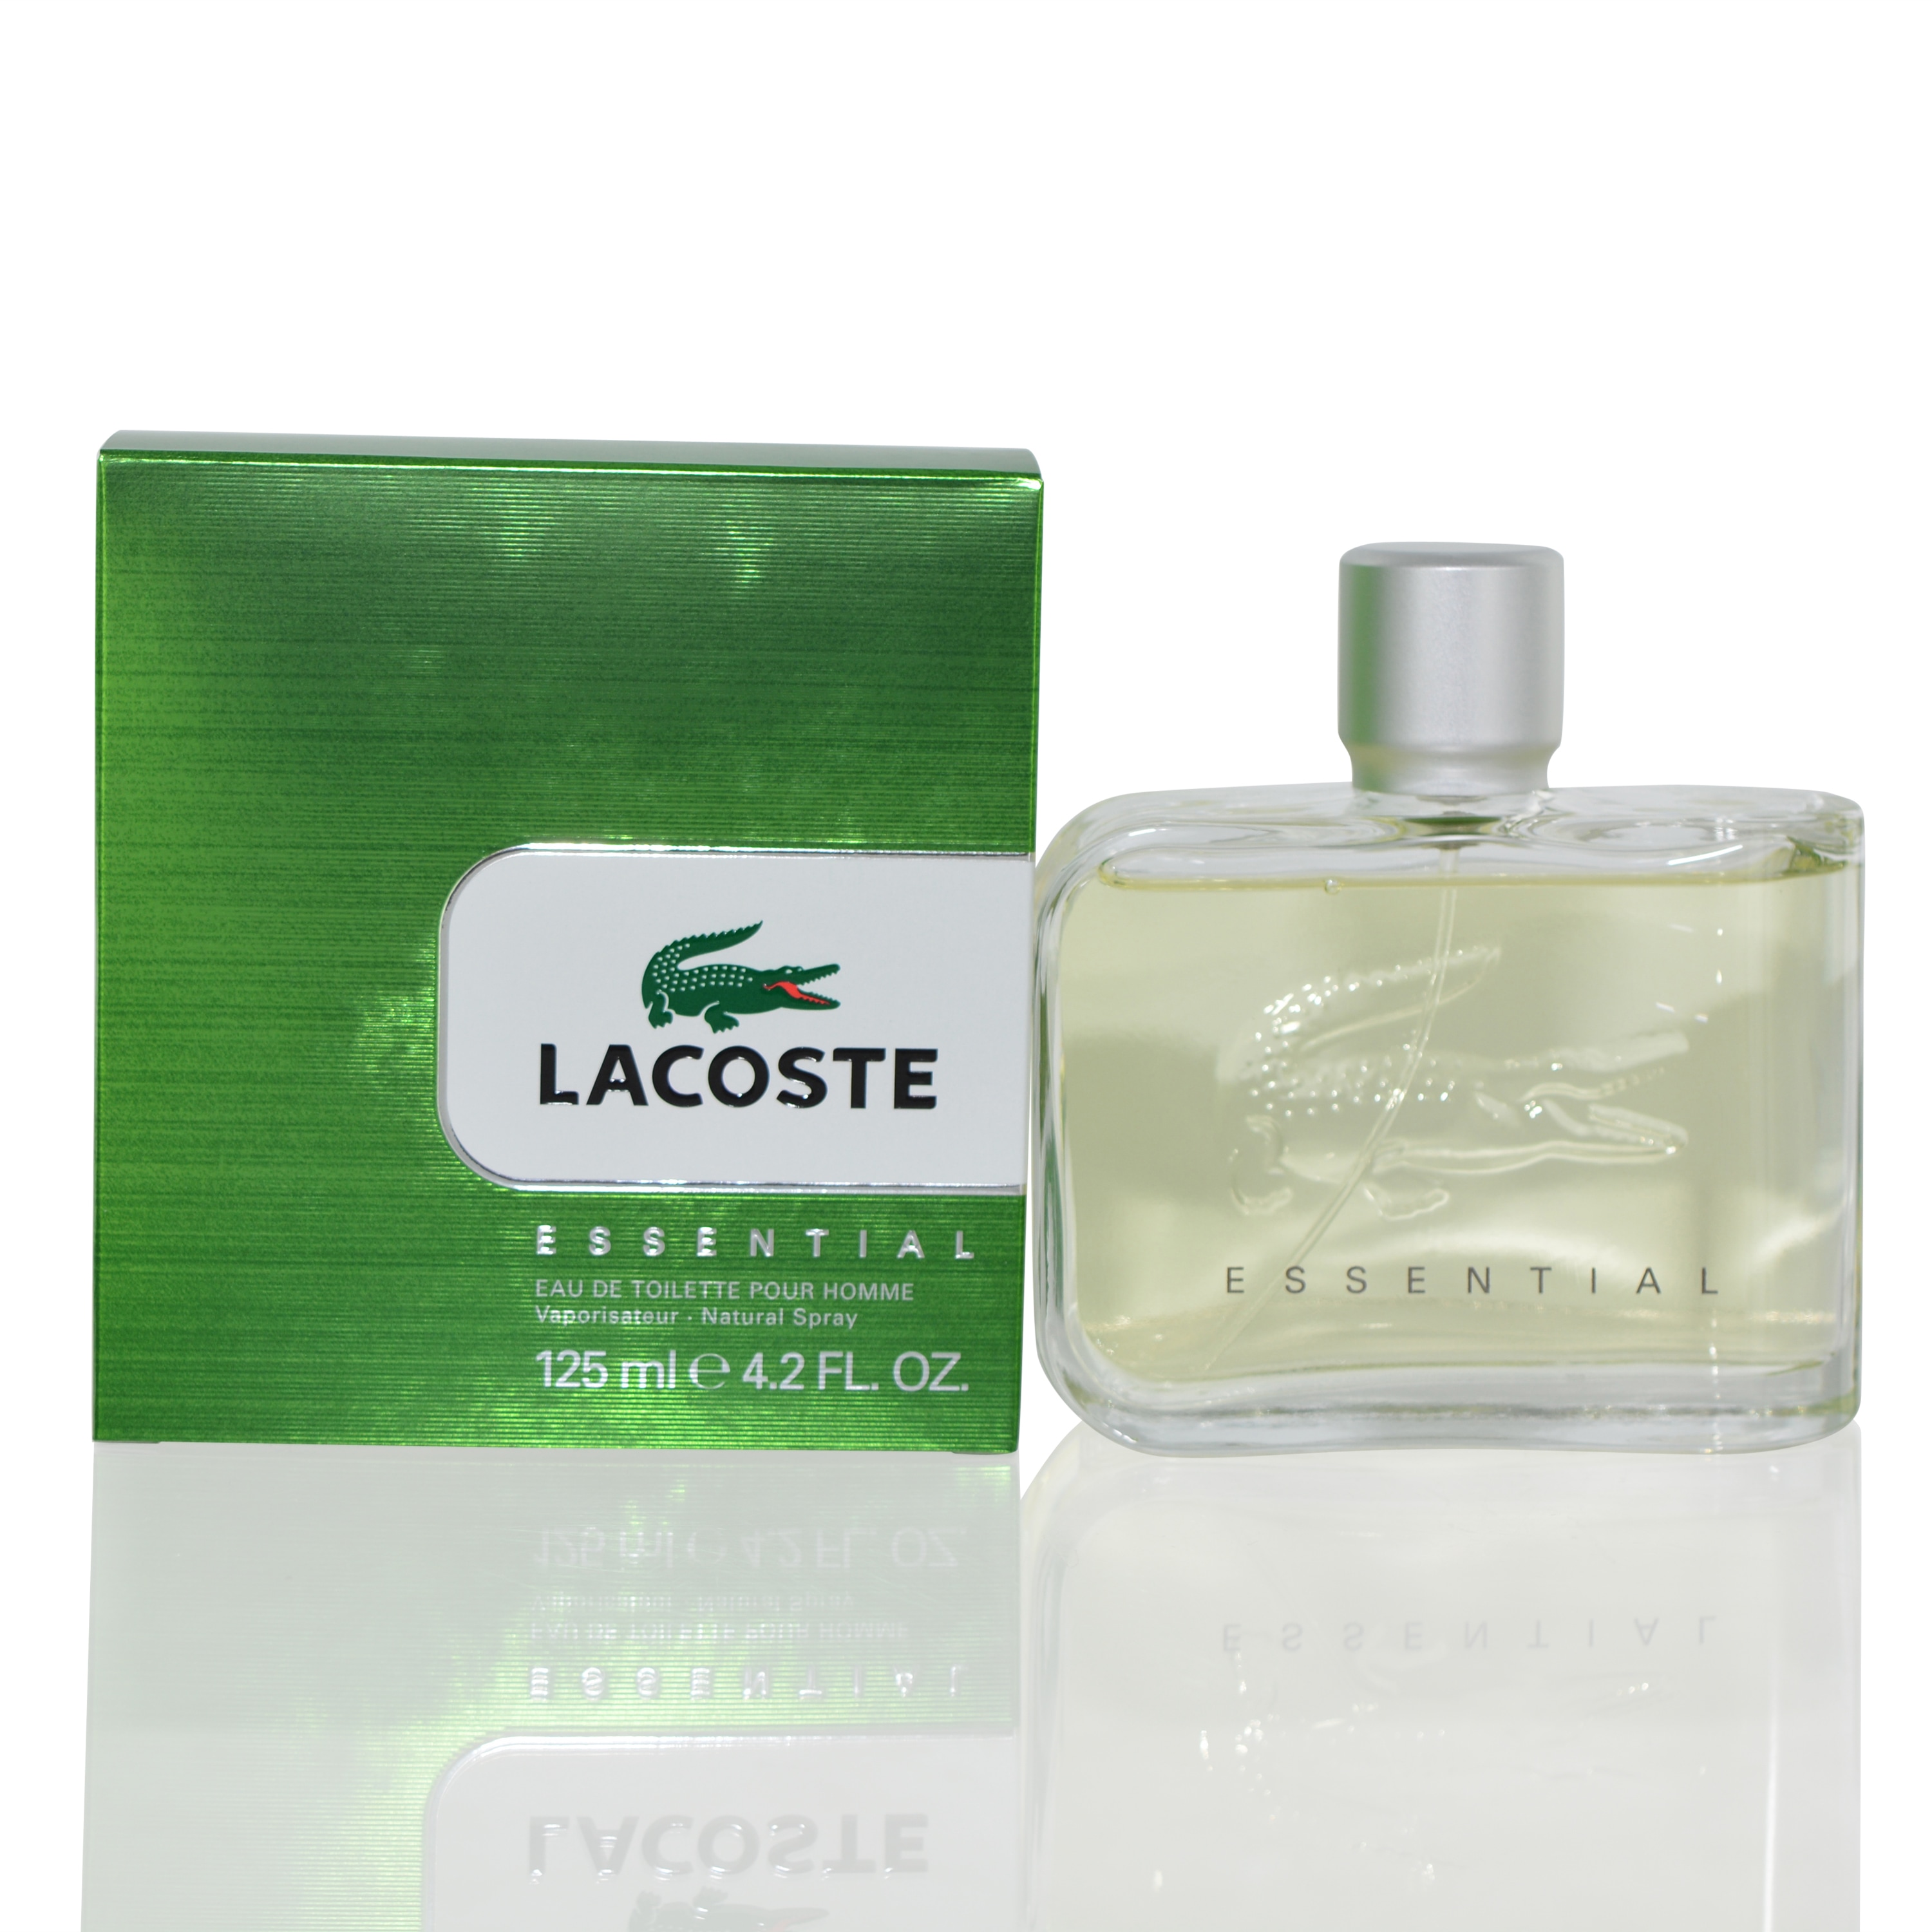 lacoste men's cologne green bottle